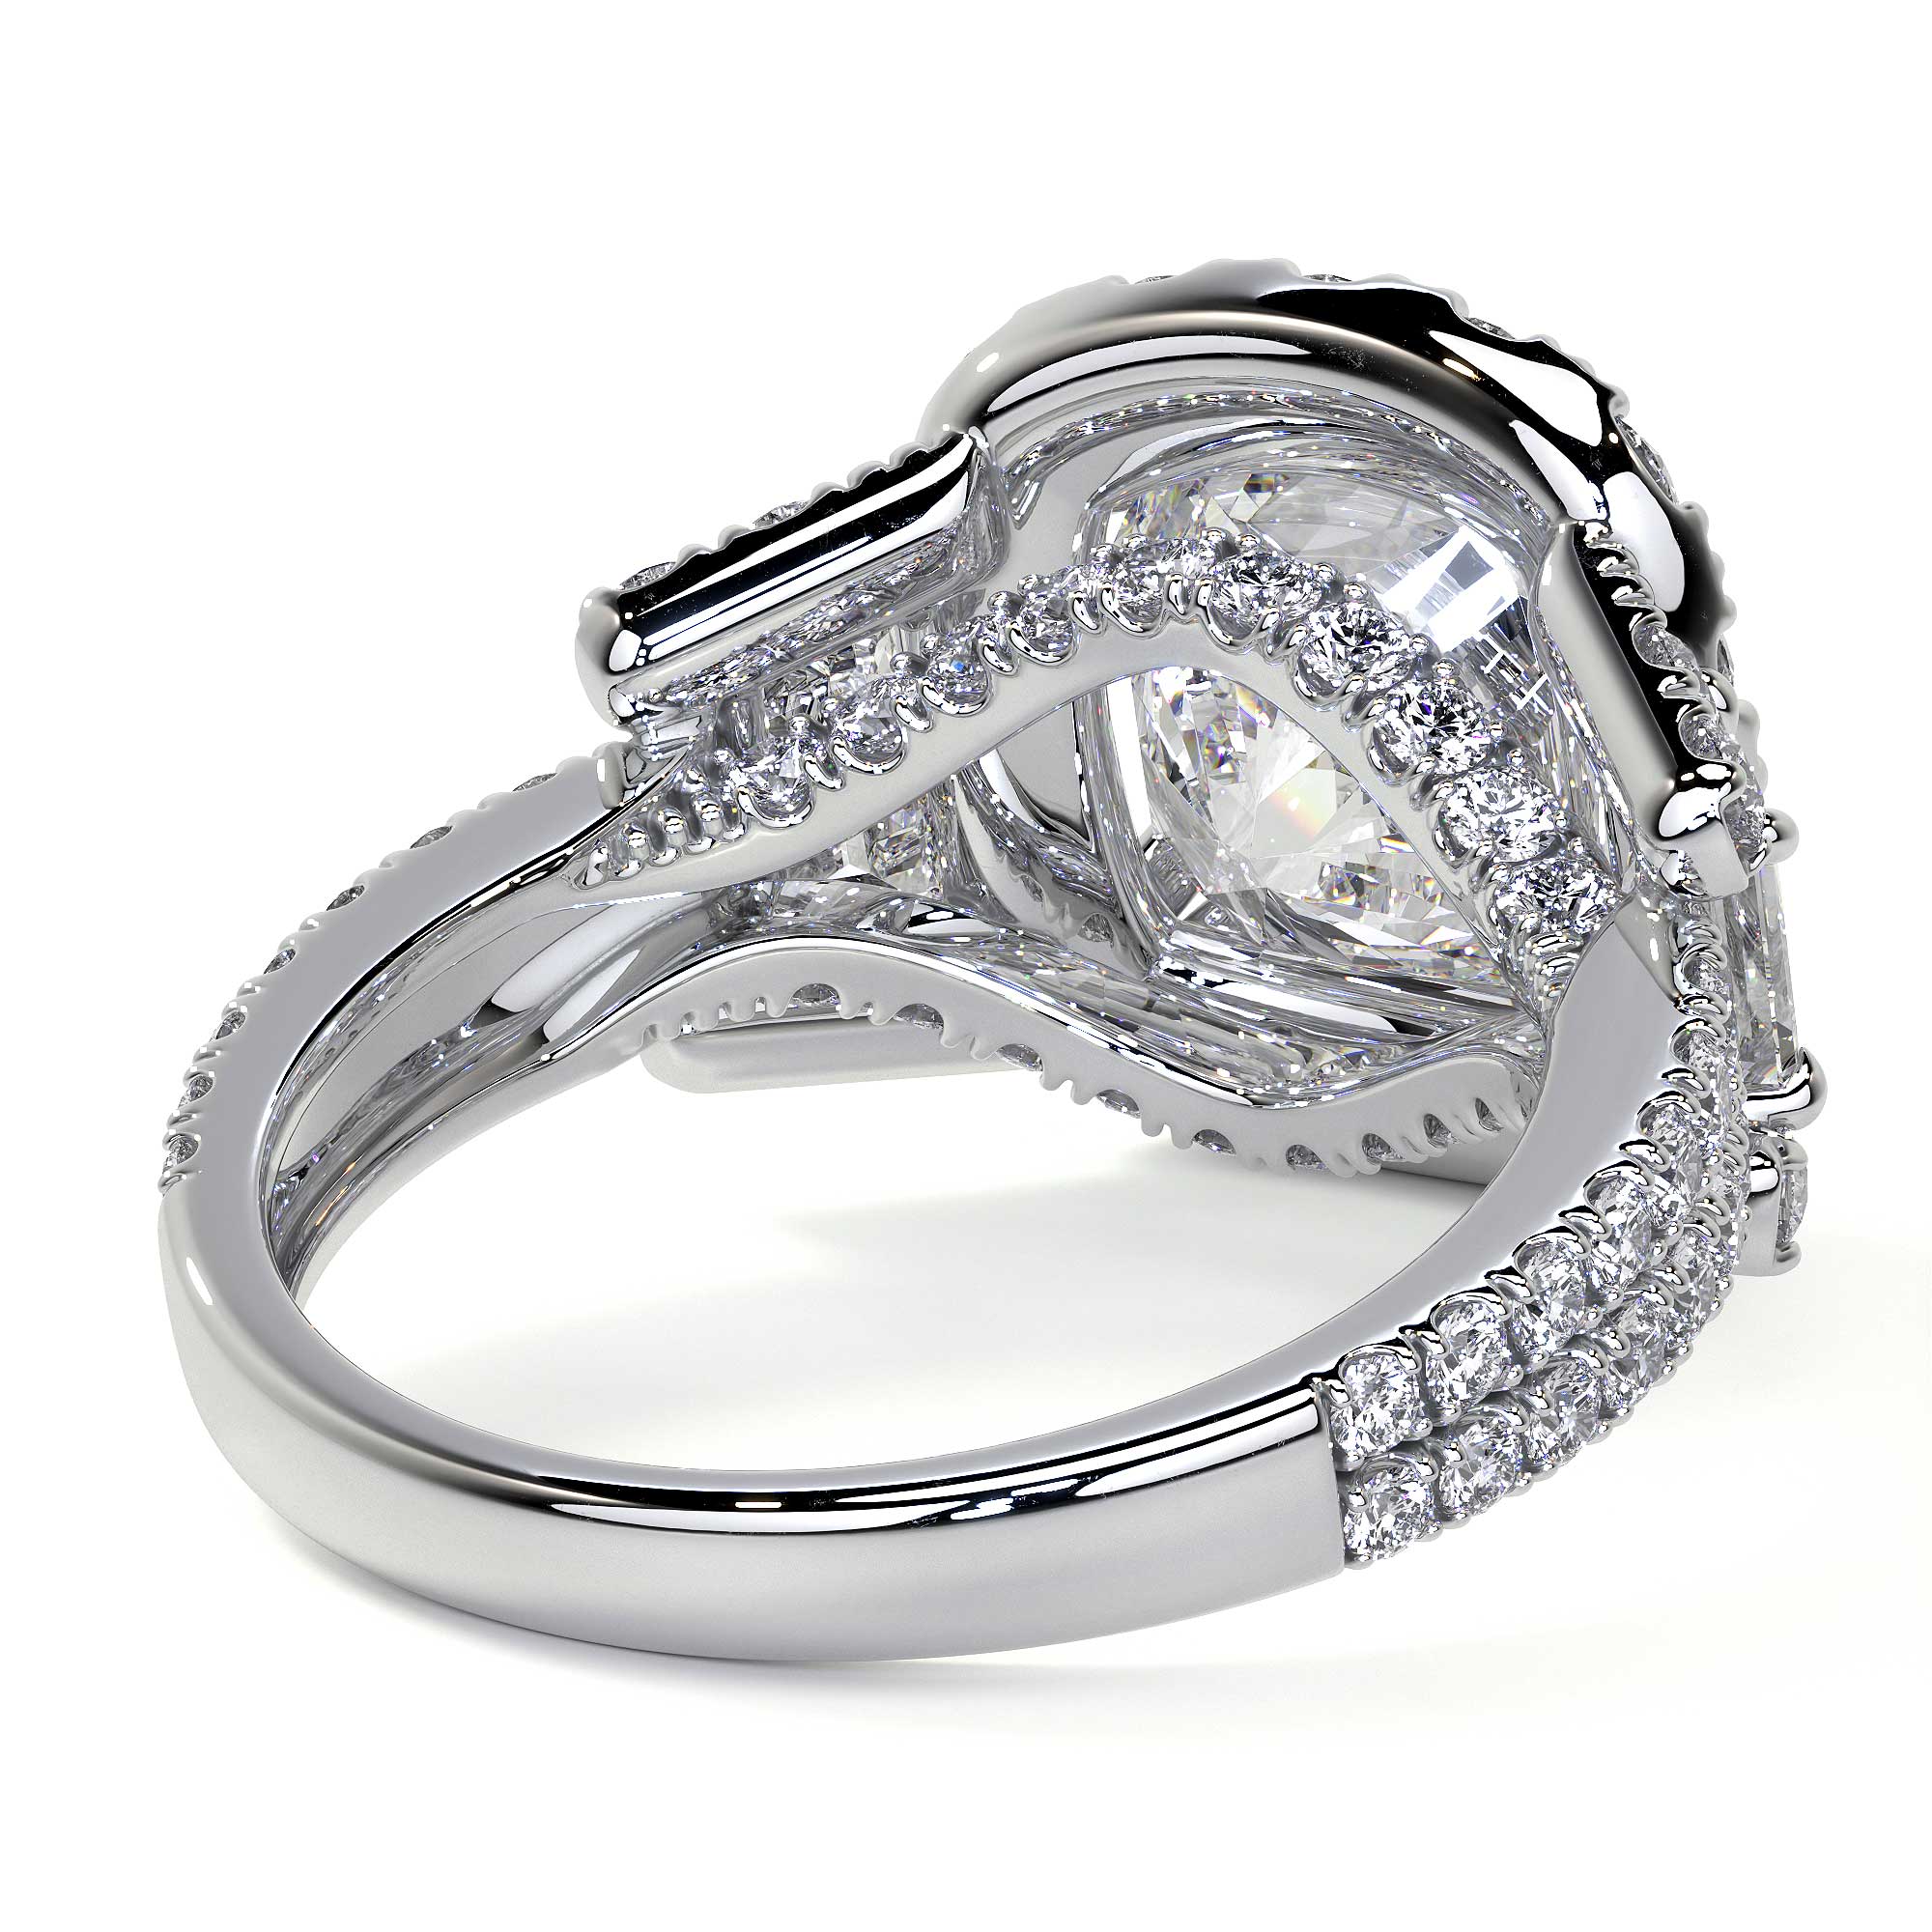 Cushion Cut 3 Stone Diamond Ring with Pave - Rings - Leviev Diamonds